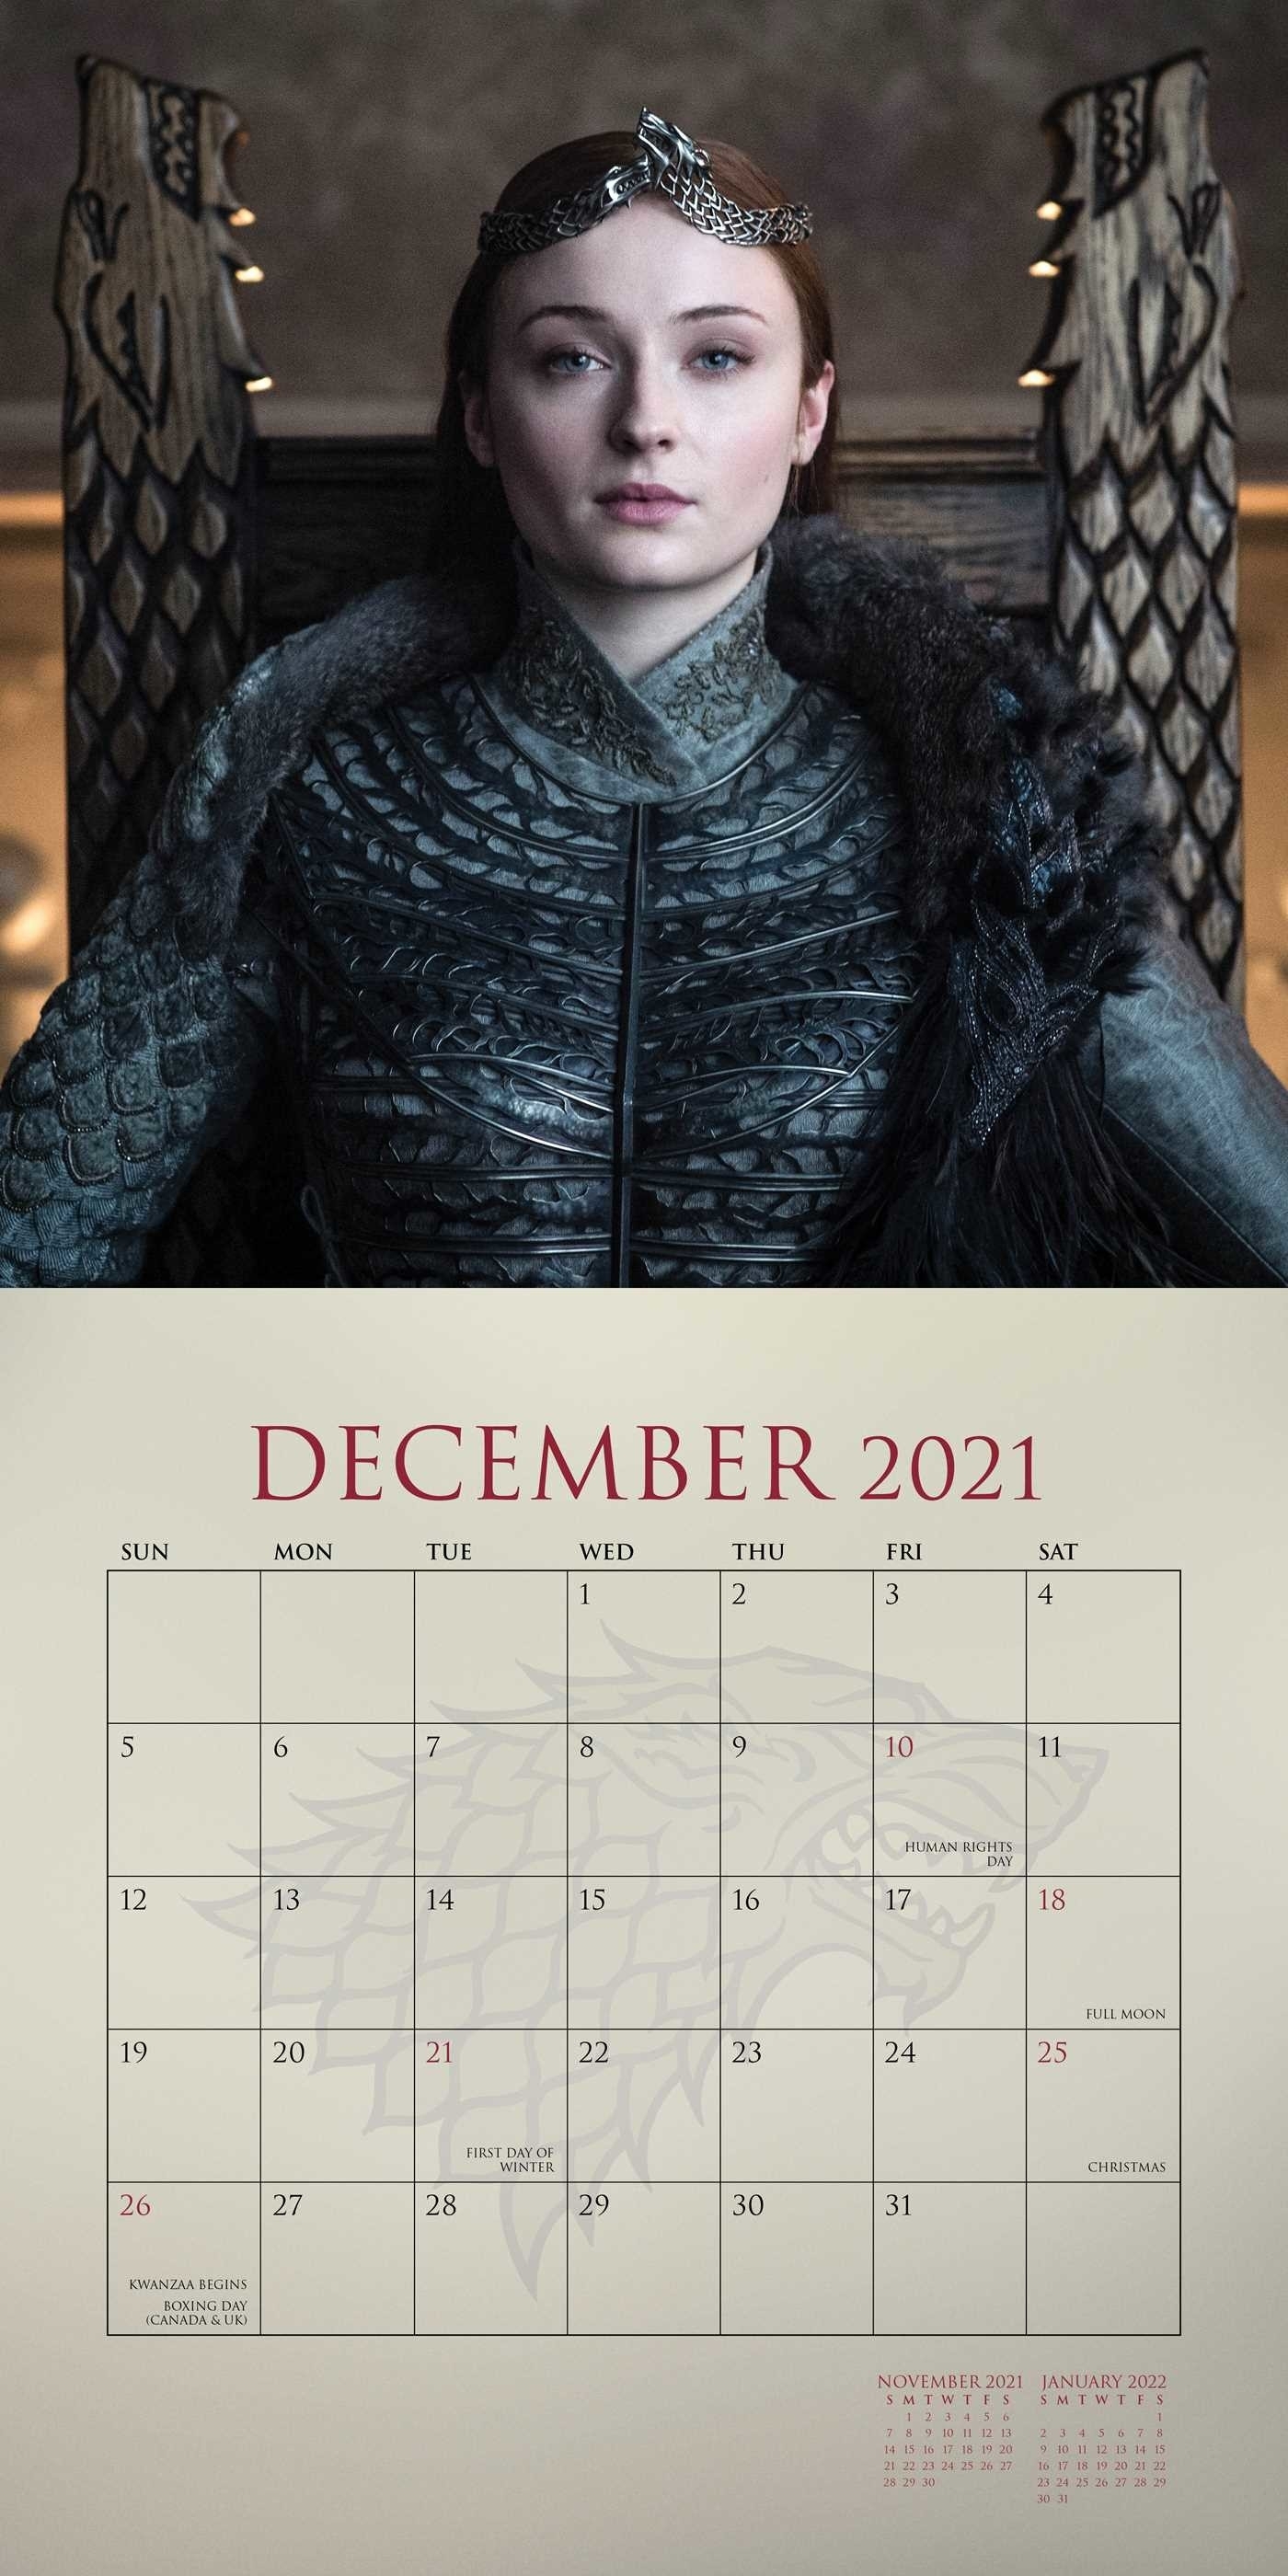 calendar-2020-game-of-thrones-month-calendar-printable